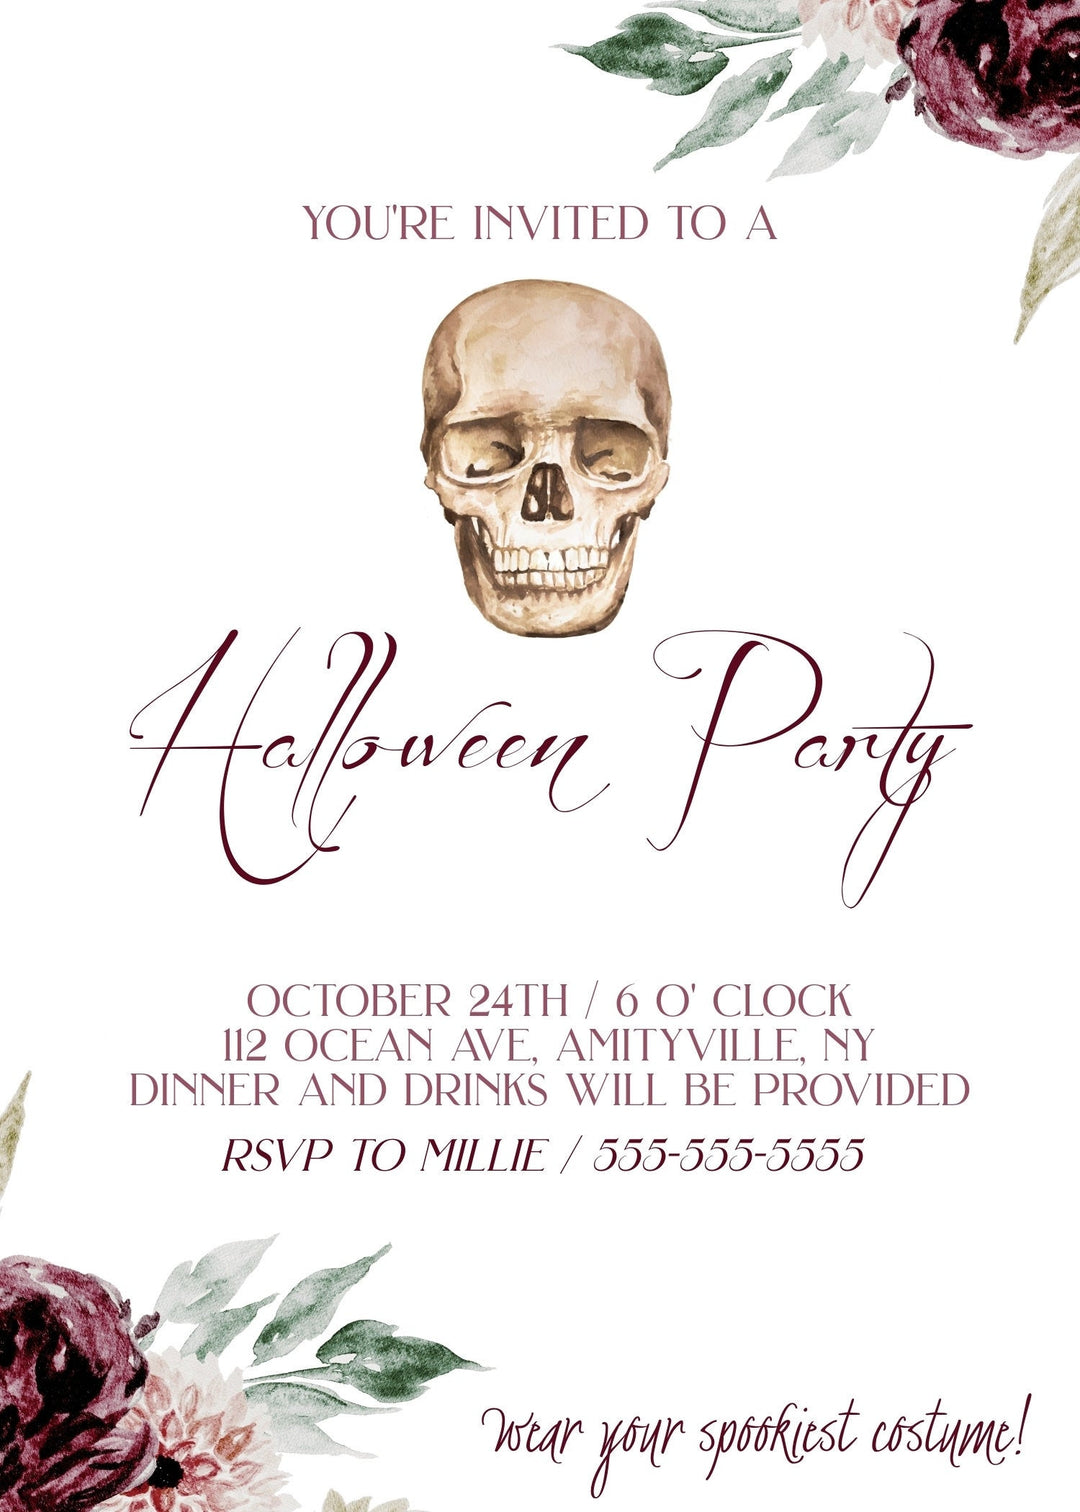 Skeleton Halloween Party Invitation - Skull Halloween Party Invite - Halloween Dinner Party Invitation - Vintage Halloween Party invite